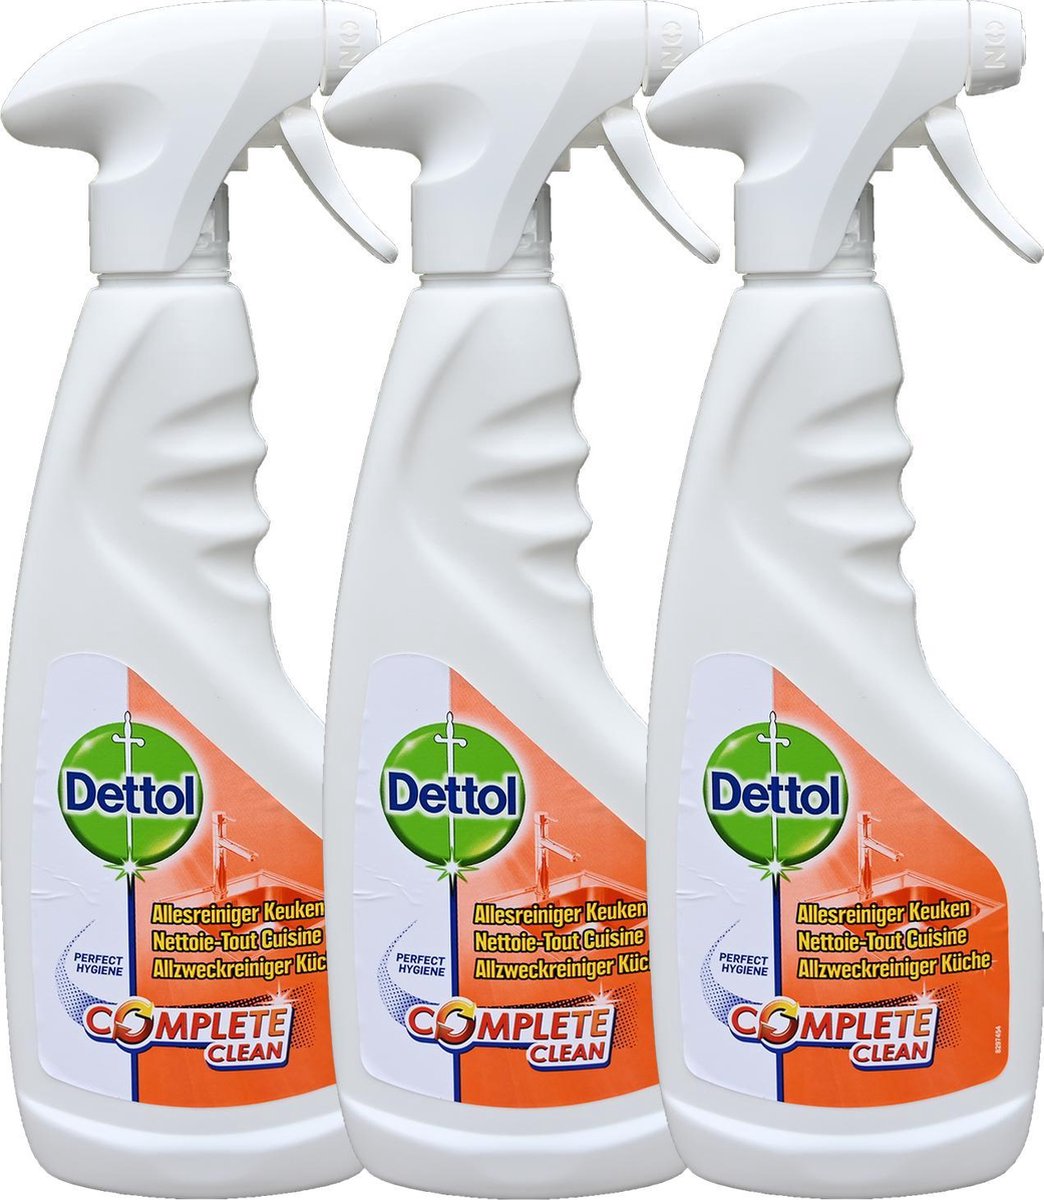 Bouwen heb vertrouwen prototype Dettol spray keuken reiniger - 100% hygiene - 3 stuks | bol.com